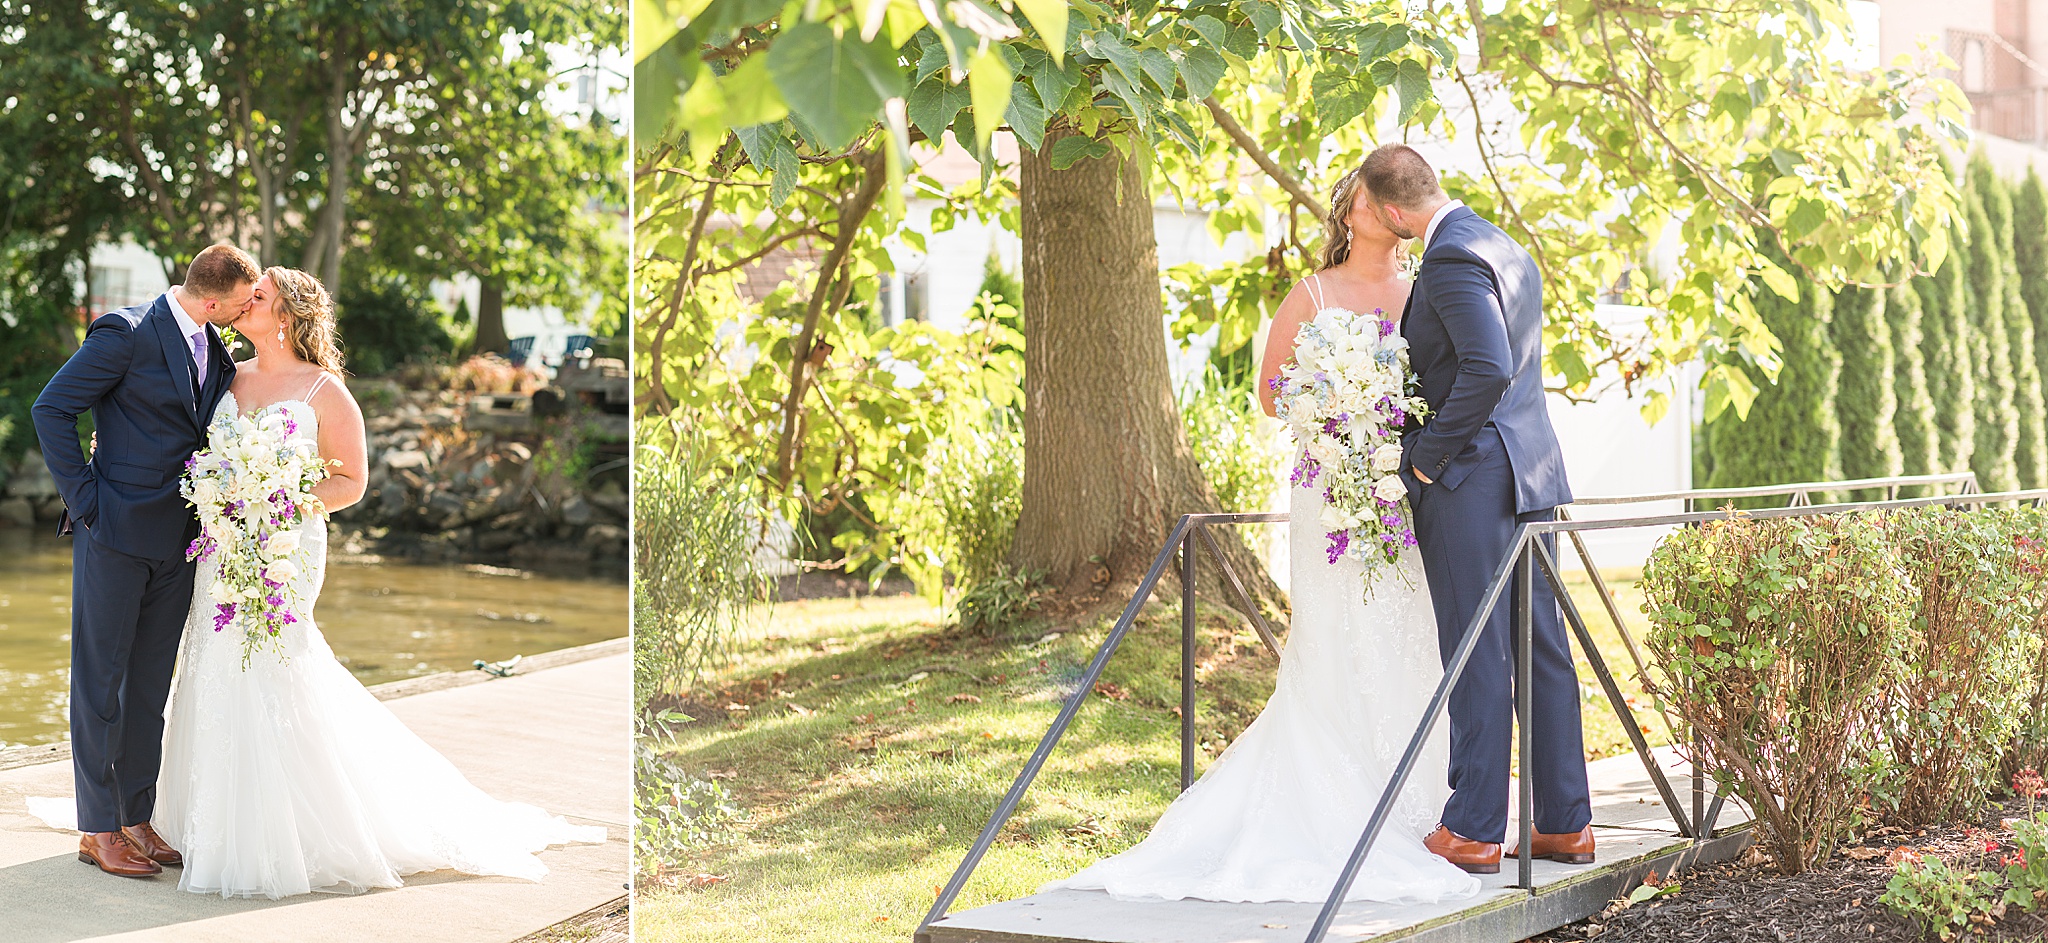 wedding photography by Alexandra Mandato Photography in Maryland